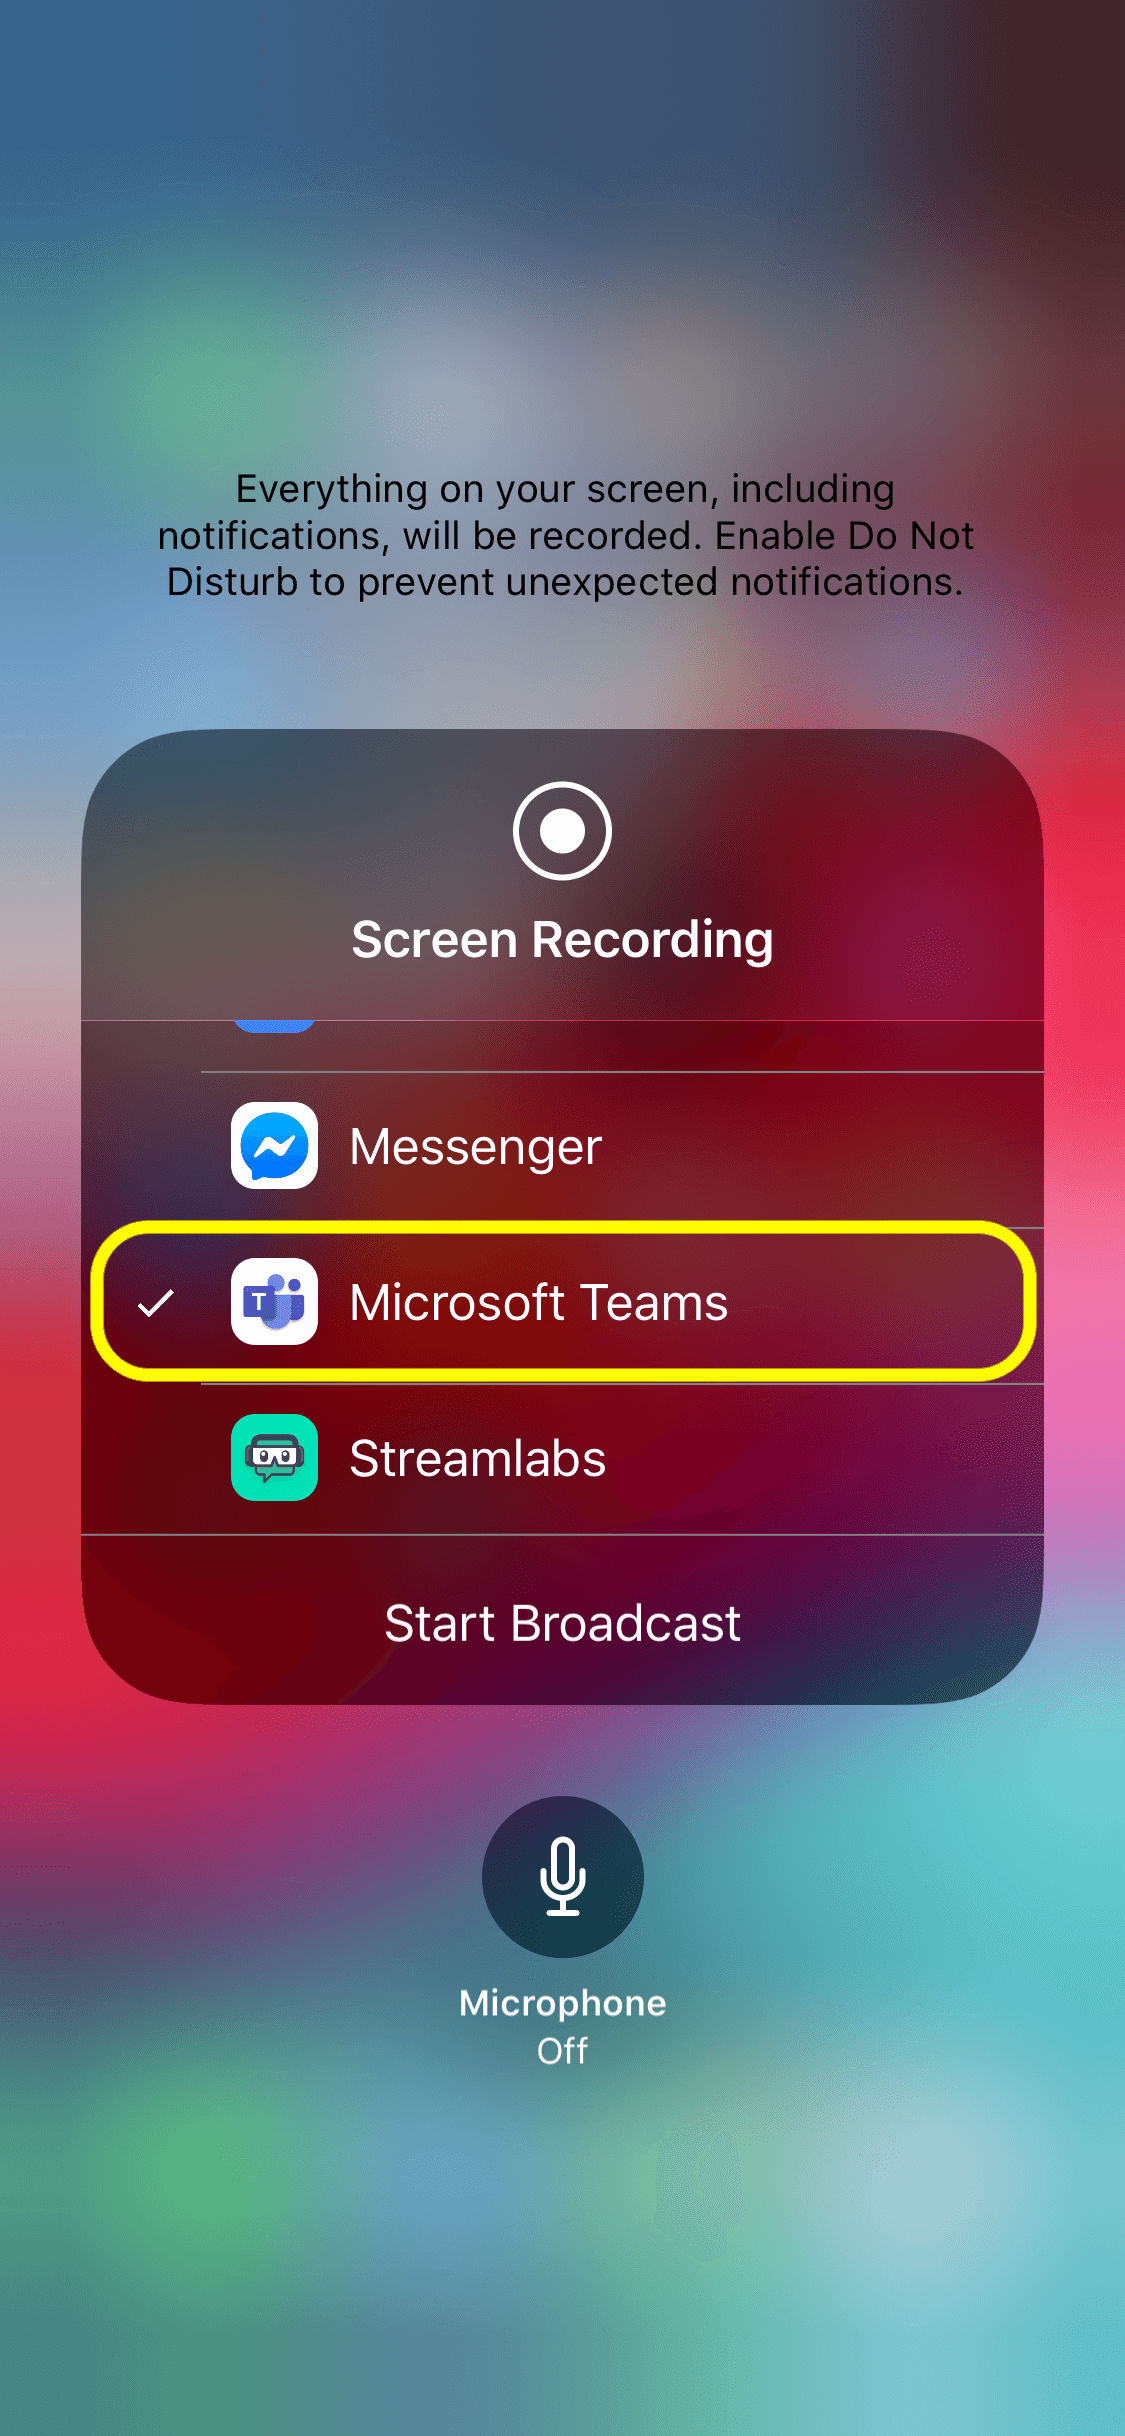 iOS Screen Recording options with Microsoft Teams selected screenshot